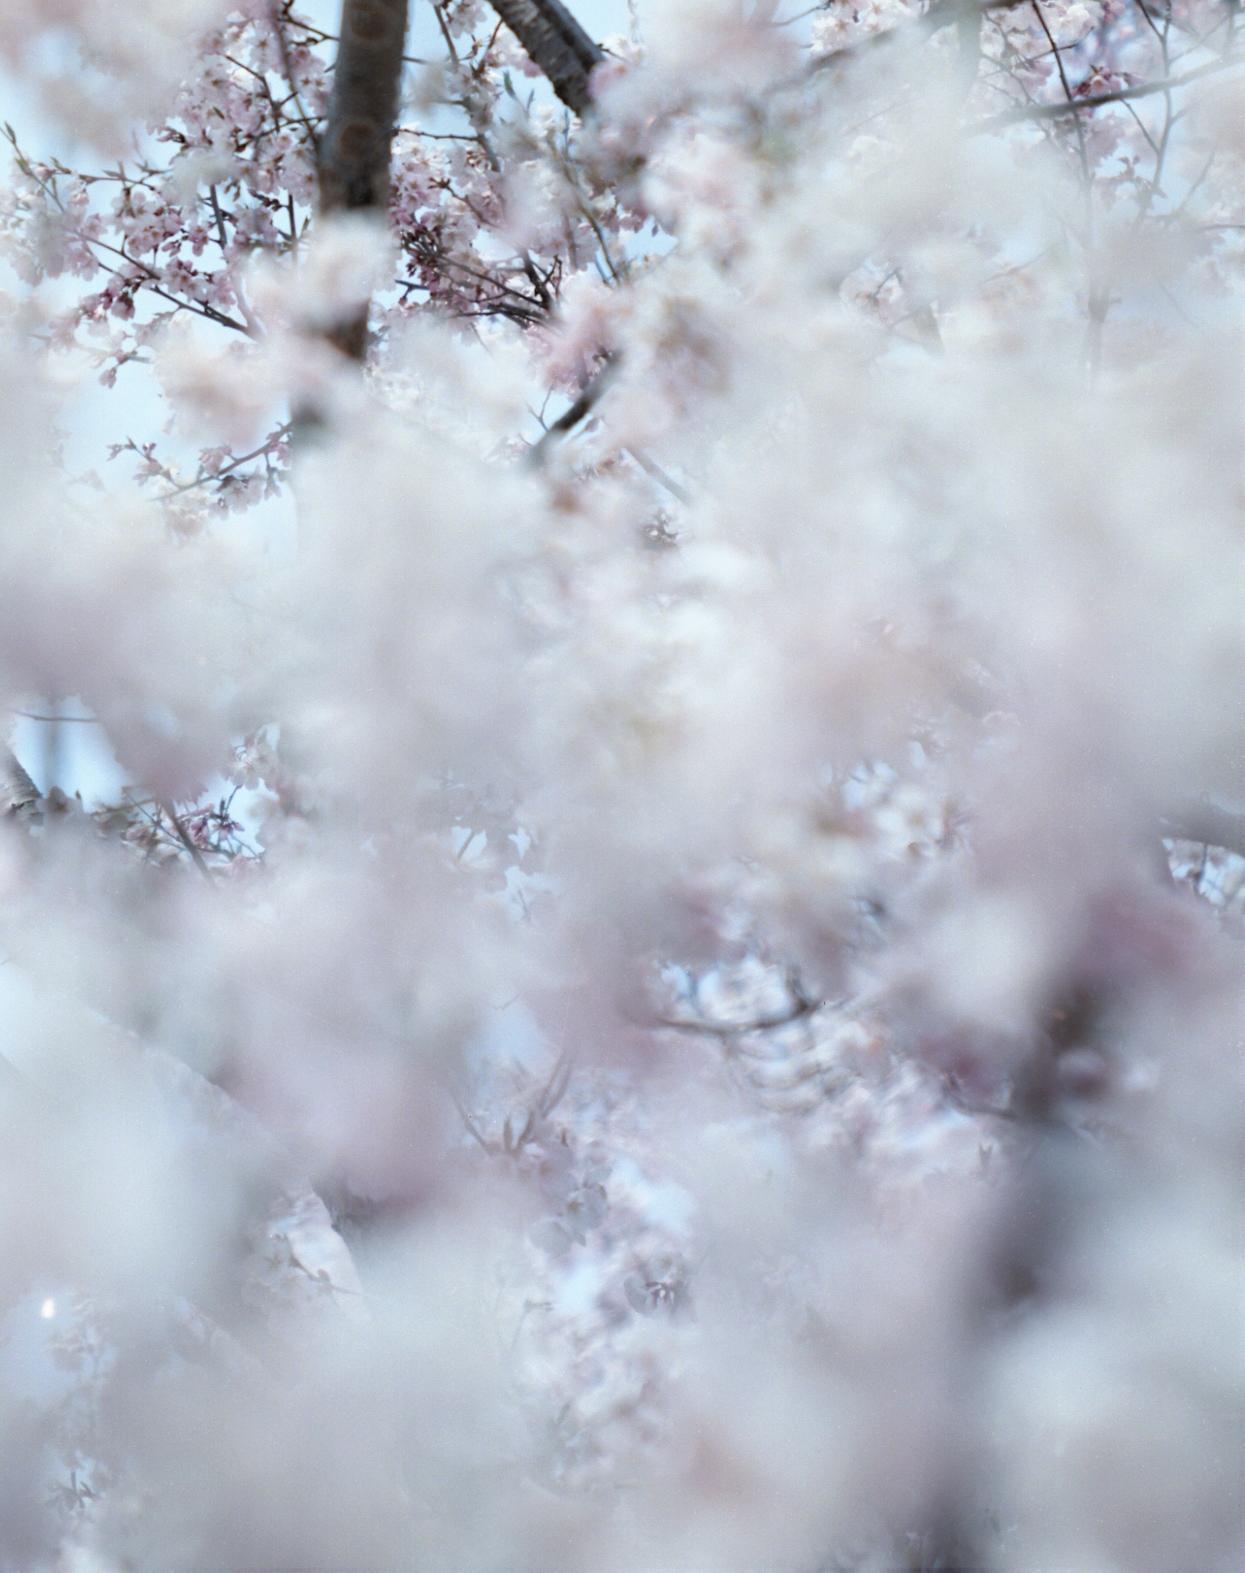 RISAKU SUZUKI (*1963, Japan)
SAKURA 15,4-32
2015
Chromogenic print
Sheet 75 x 60 cm (29 1/2 x 23 5/8 in.)
Edition of 5; Ed. no. 1/10
Framed

The Sakura (Japanese term for ‘cherry blossoms’) Celebration commences in early spring and has inspired